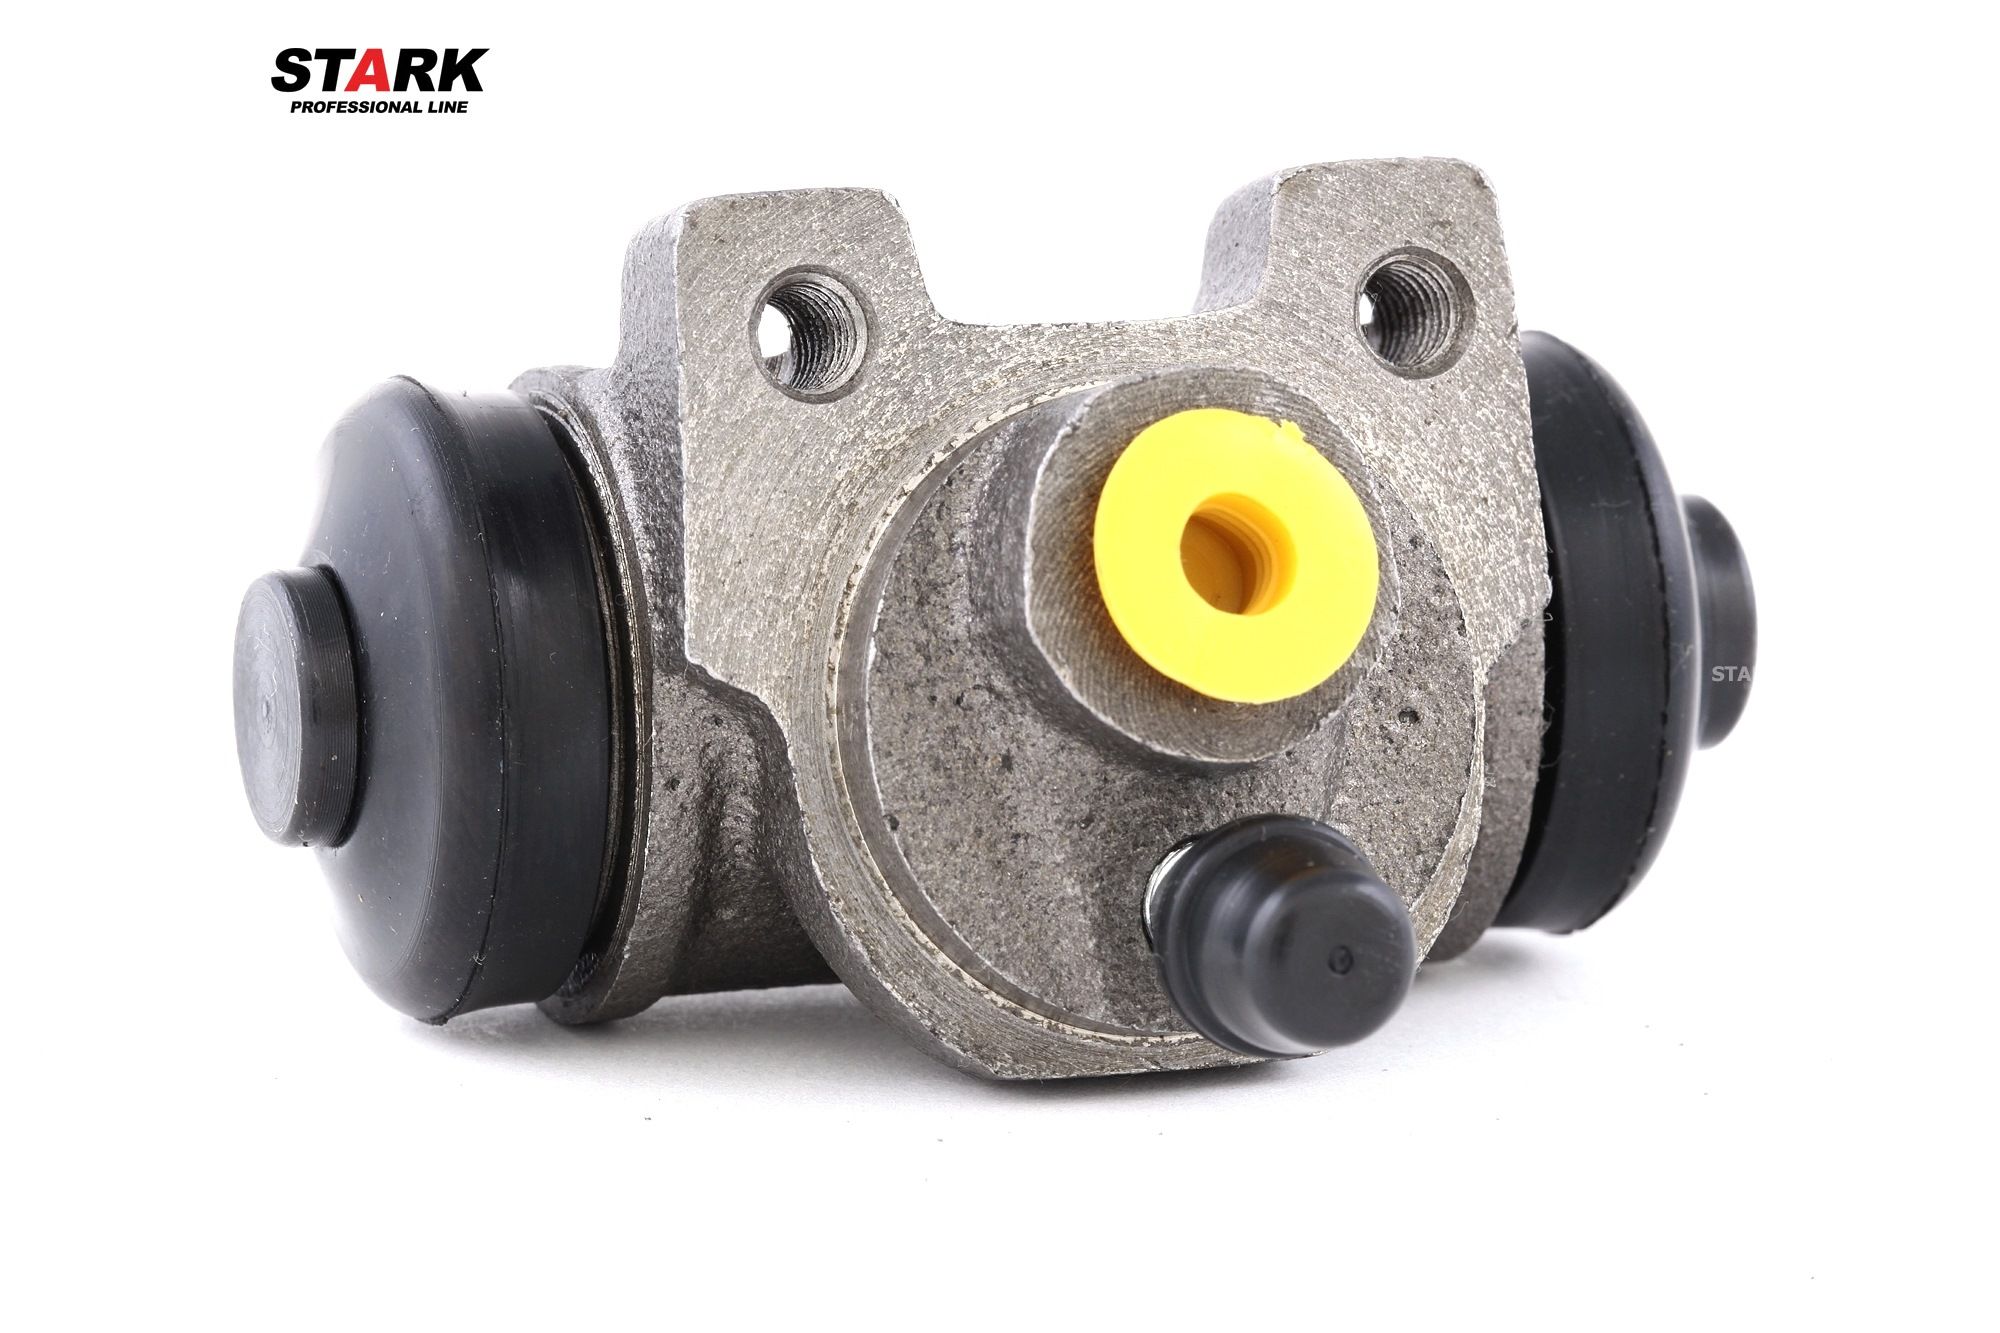 SKWBC-0680008 STARK Drum brake kit LEXUS 17,8 mm, Rear Axle both sides, Cast Iron, 1x M10x1.0